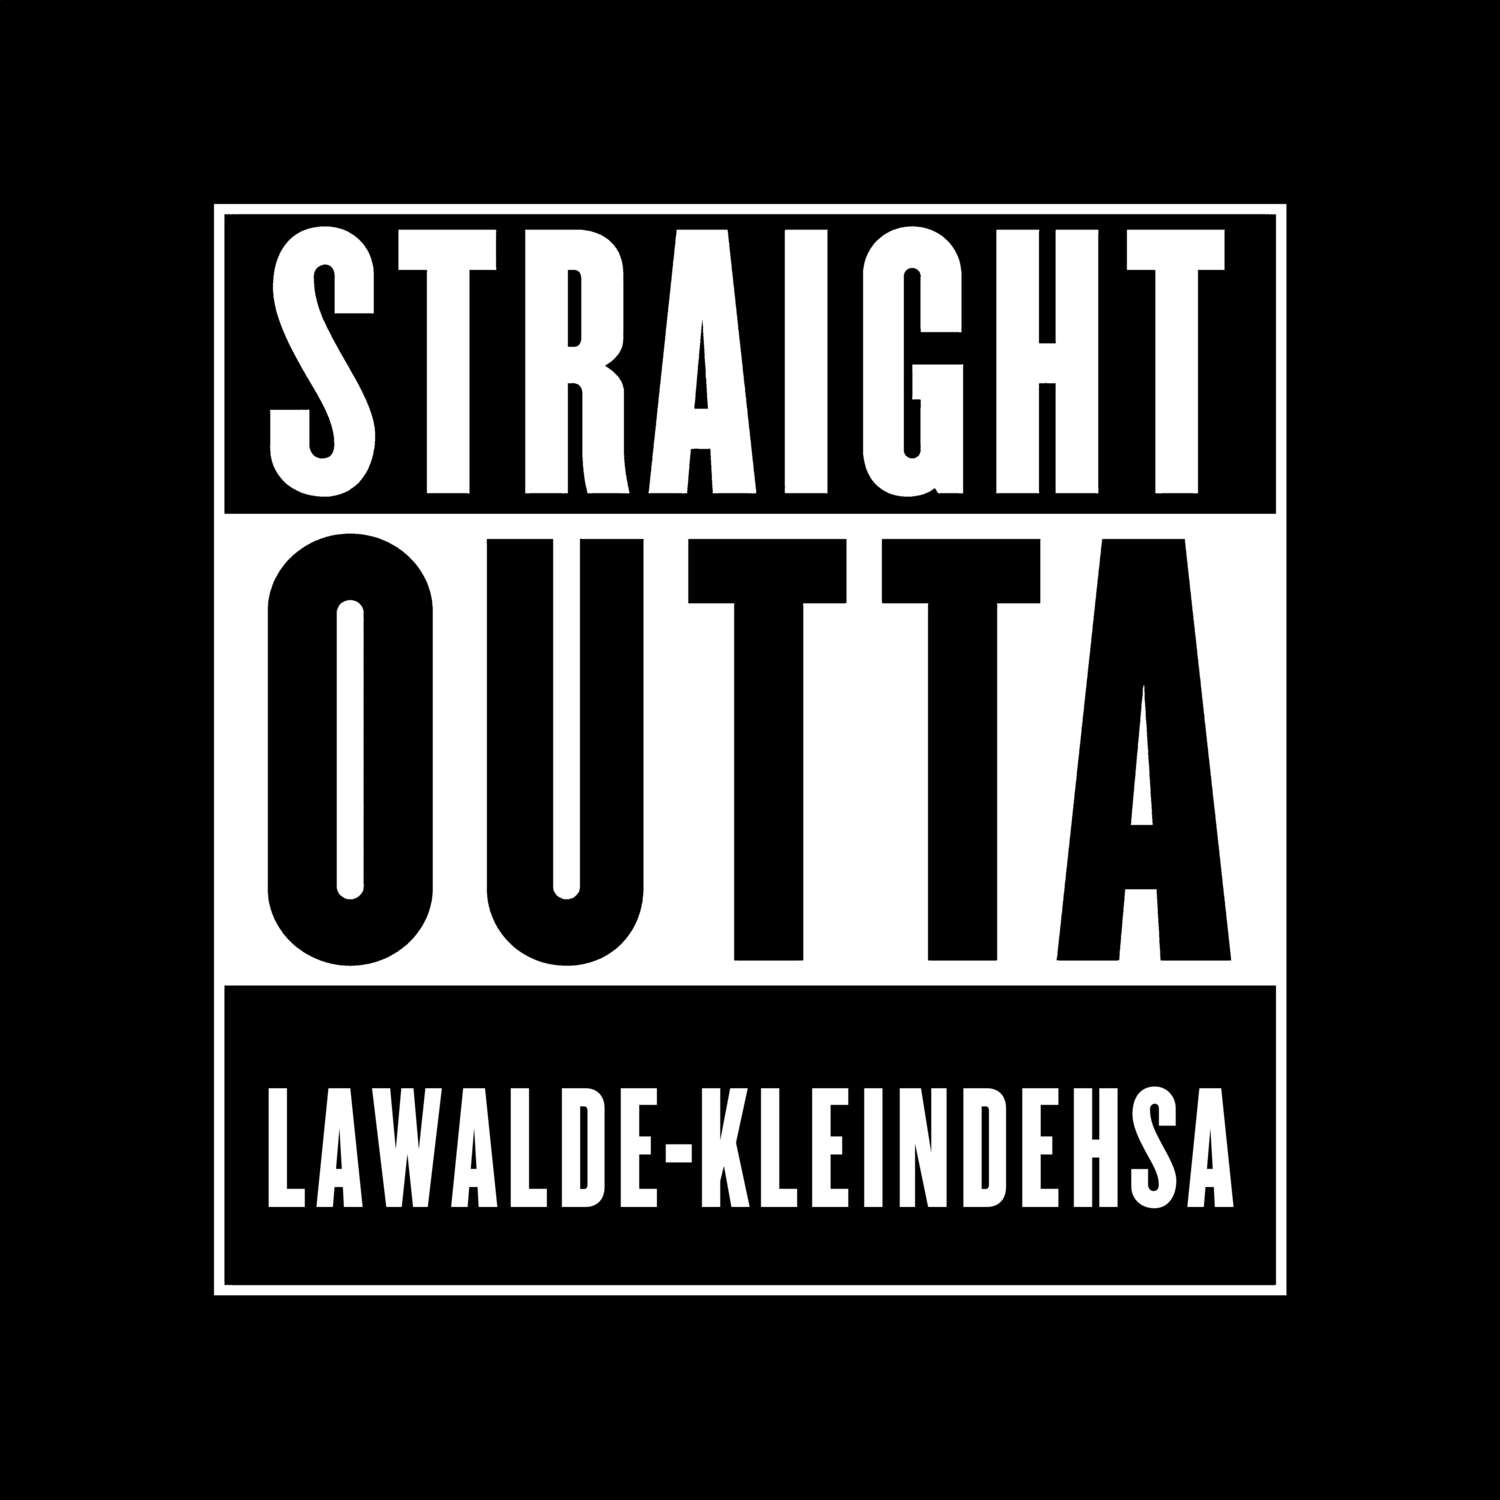 Lawalde-Kleindehsa T-Shirt »Straight Outta«